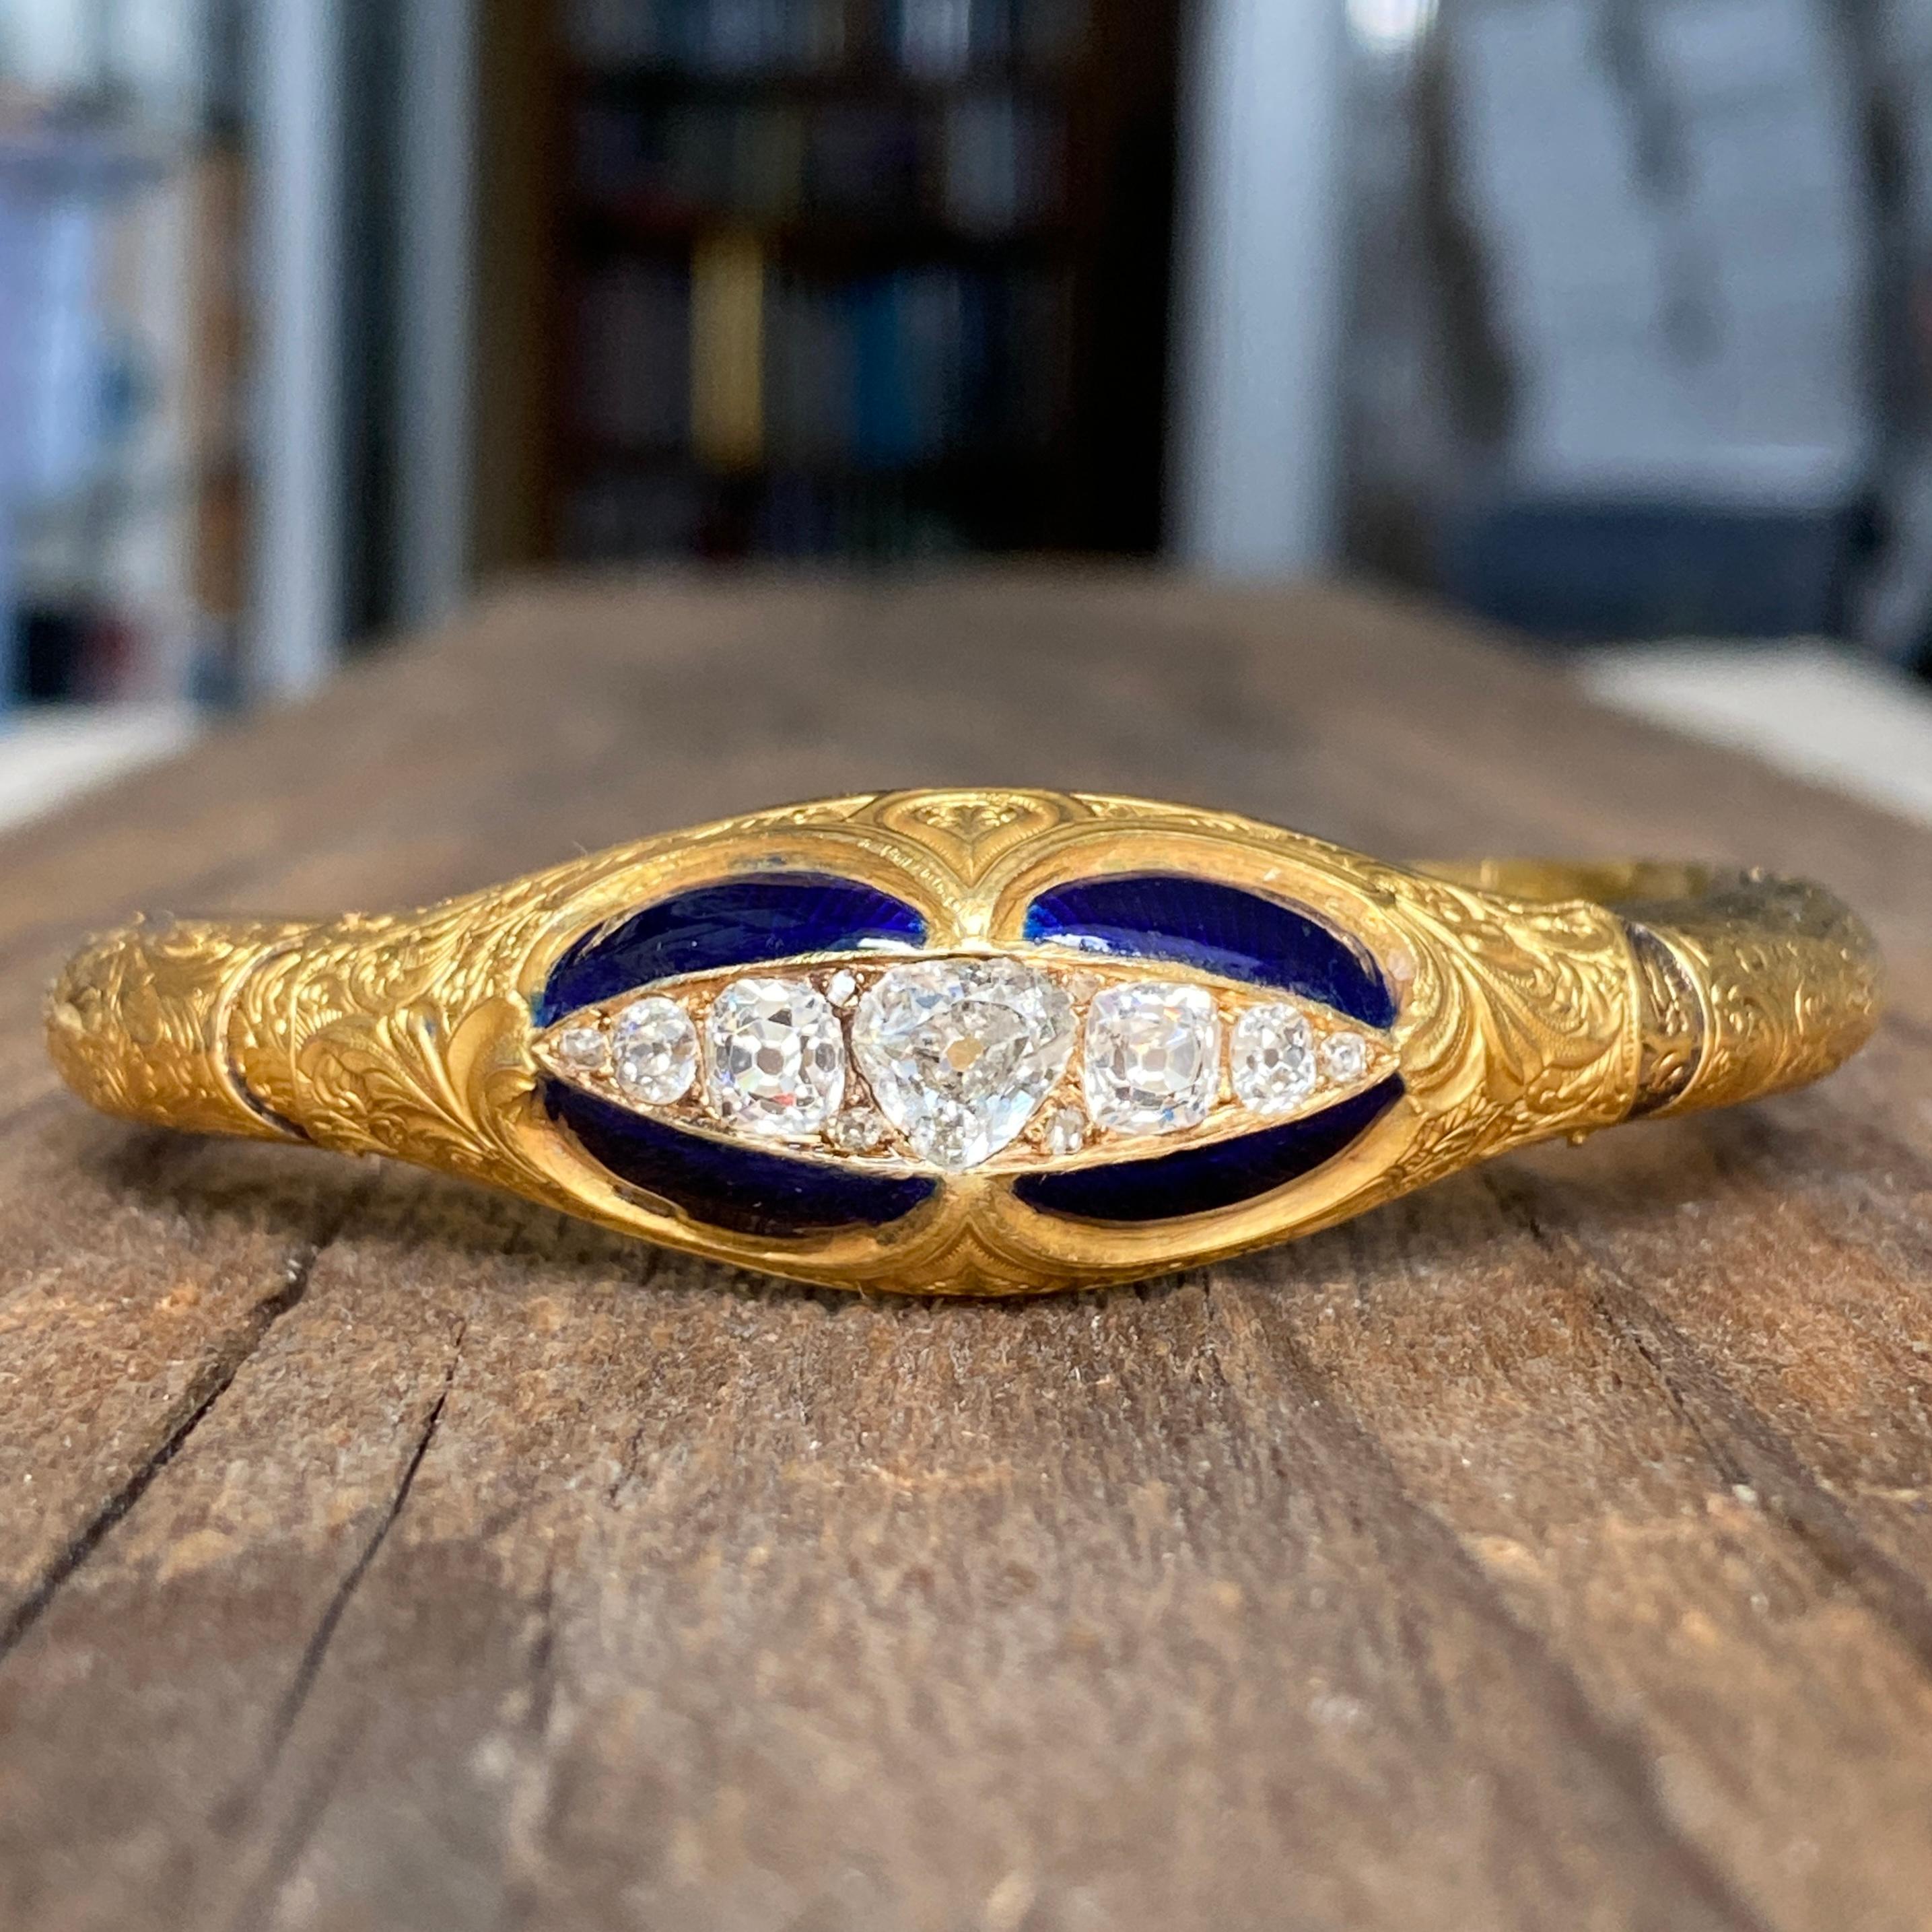 15k gold ring